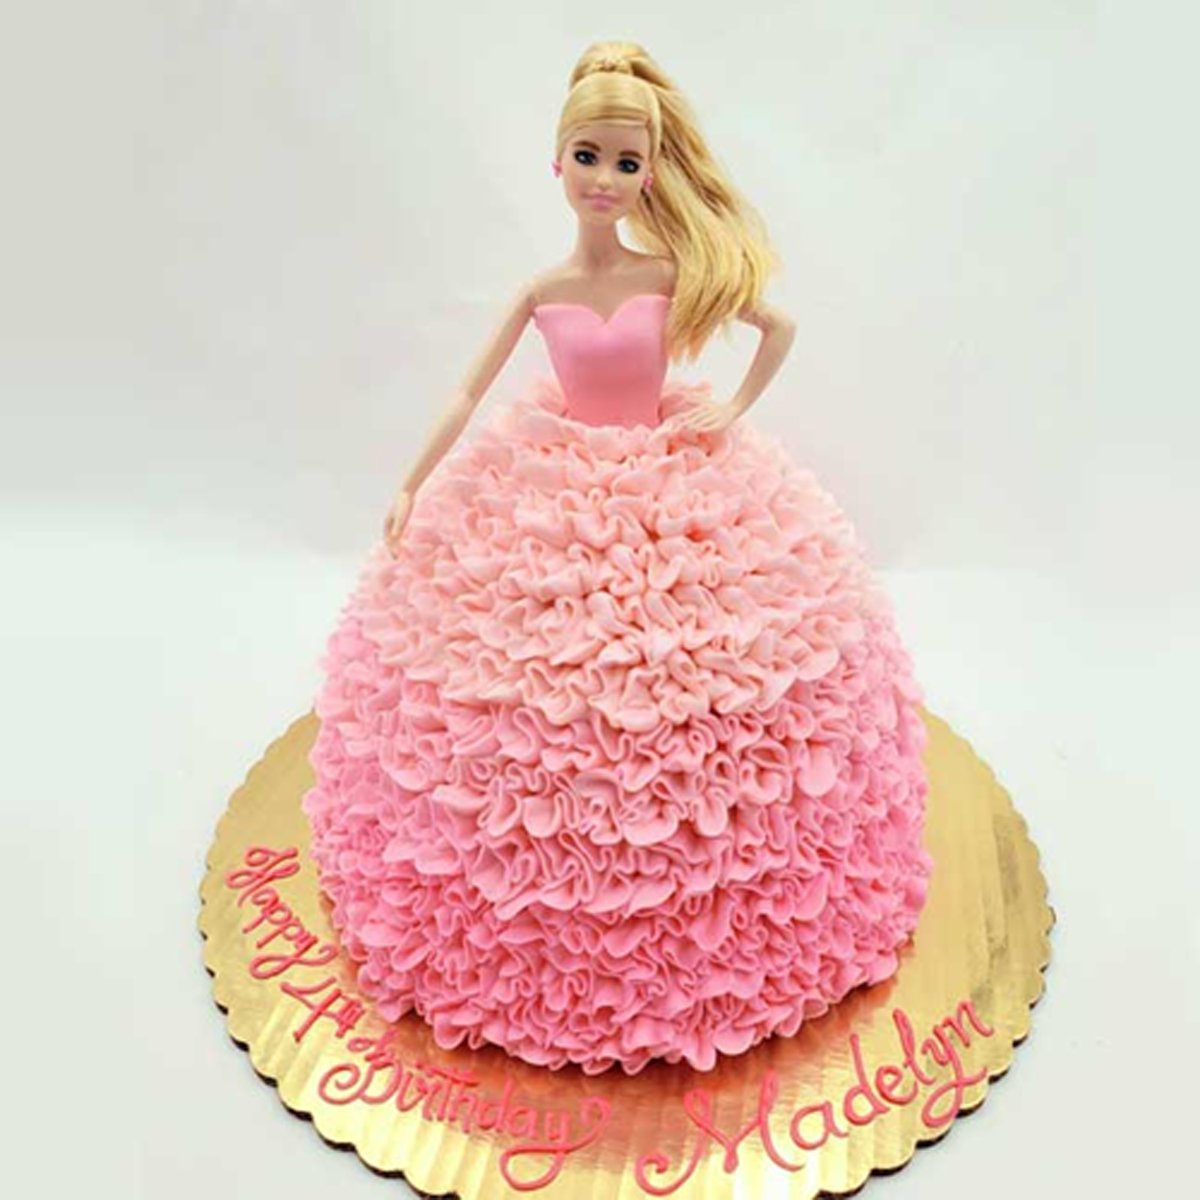 Fairy Princess Doll cake - Decorated Cake by Rachel - CakesDecor